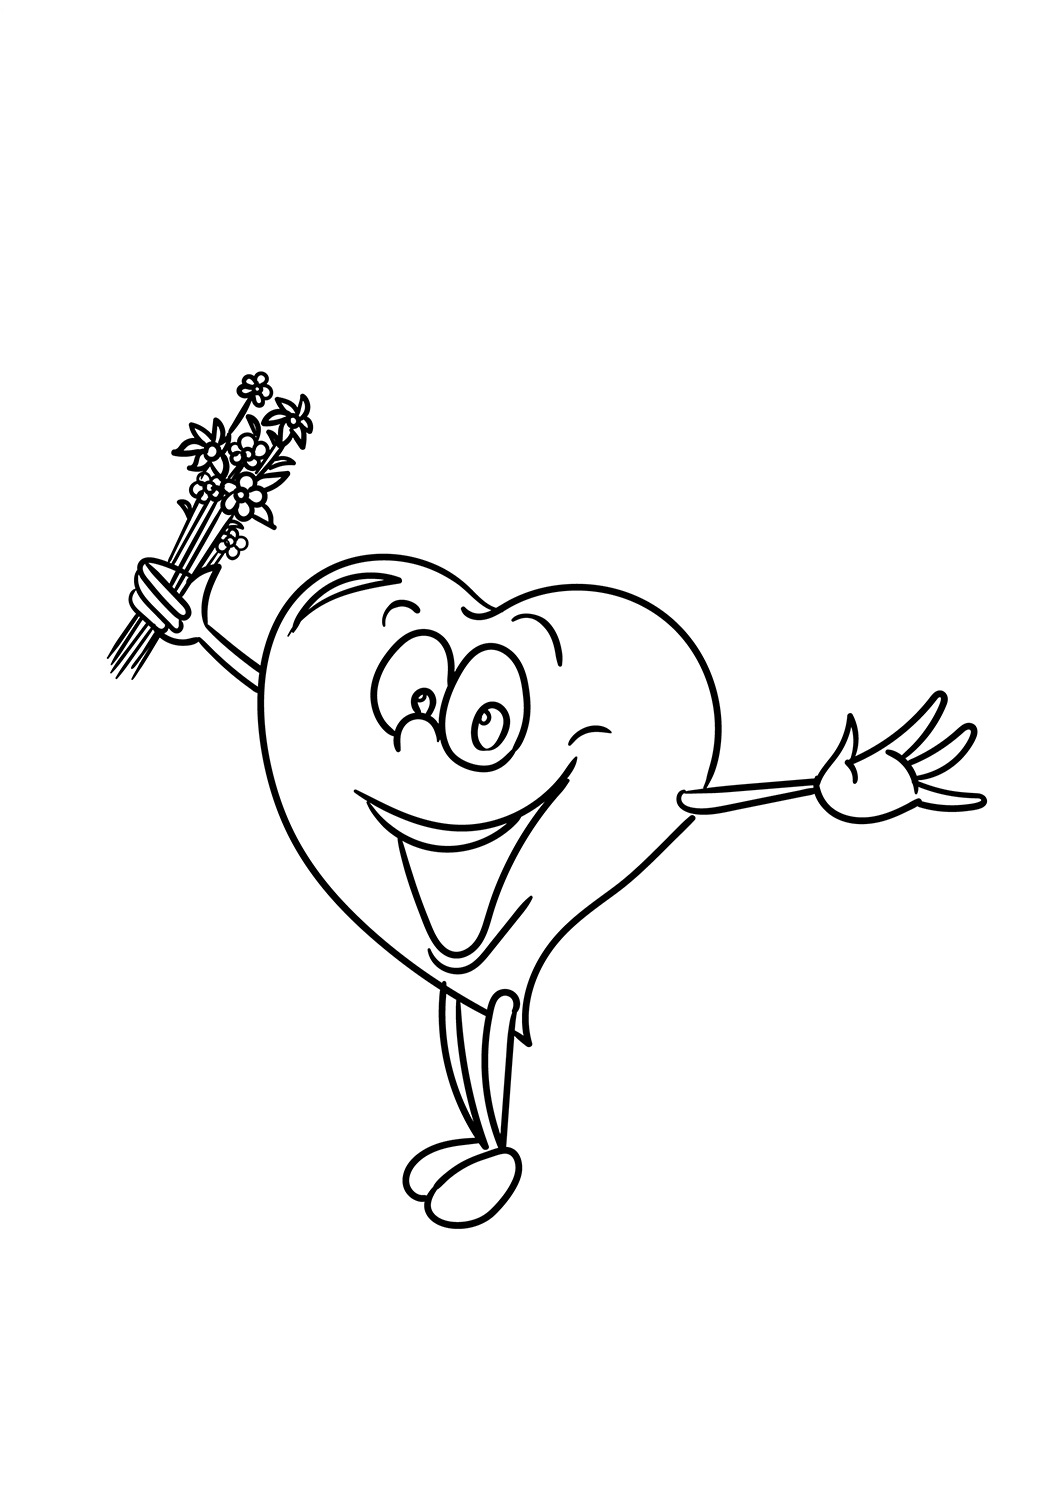 Happy Cartoon Heart Coloring Page - Free Printable ...